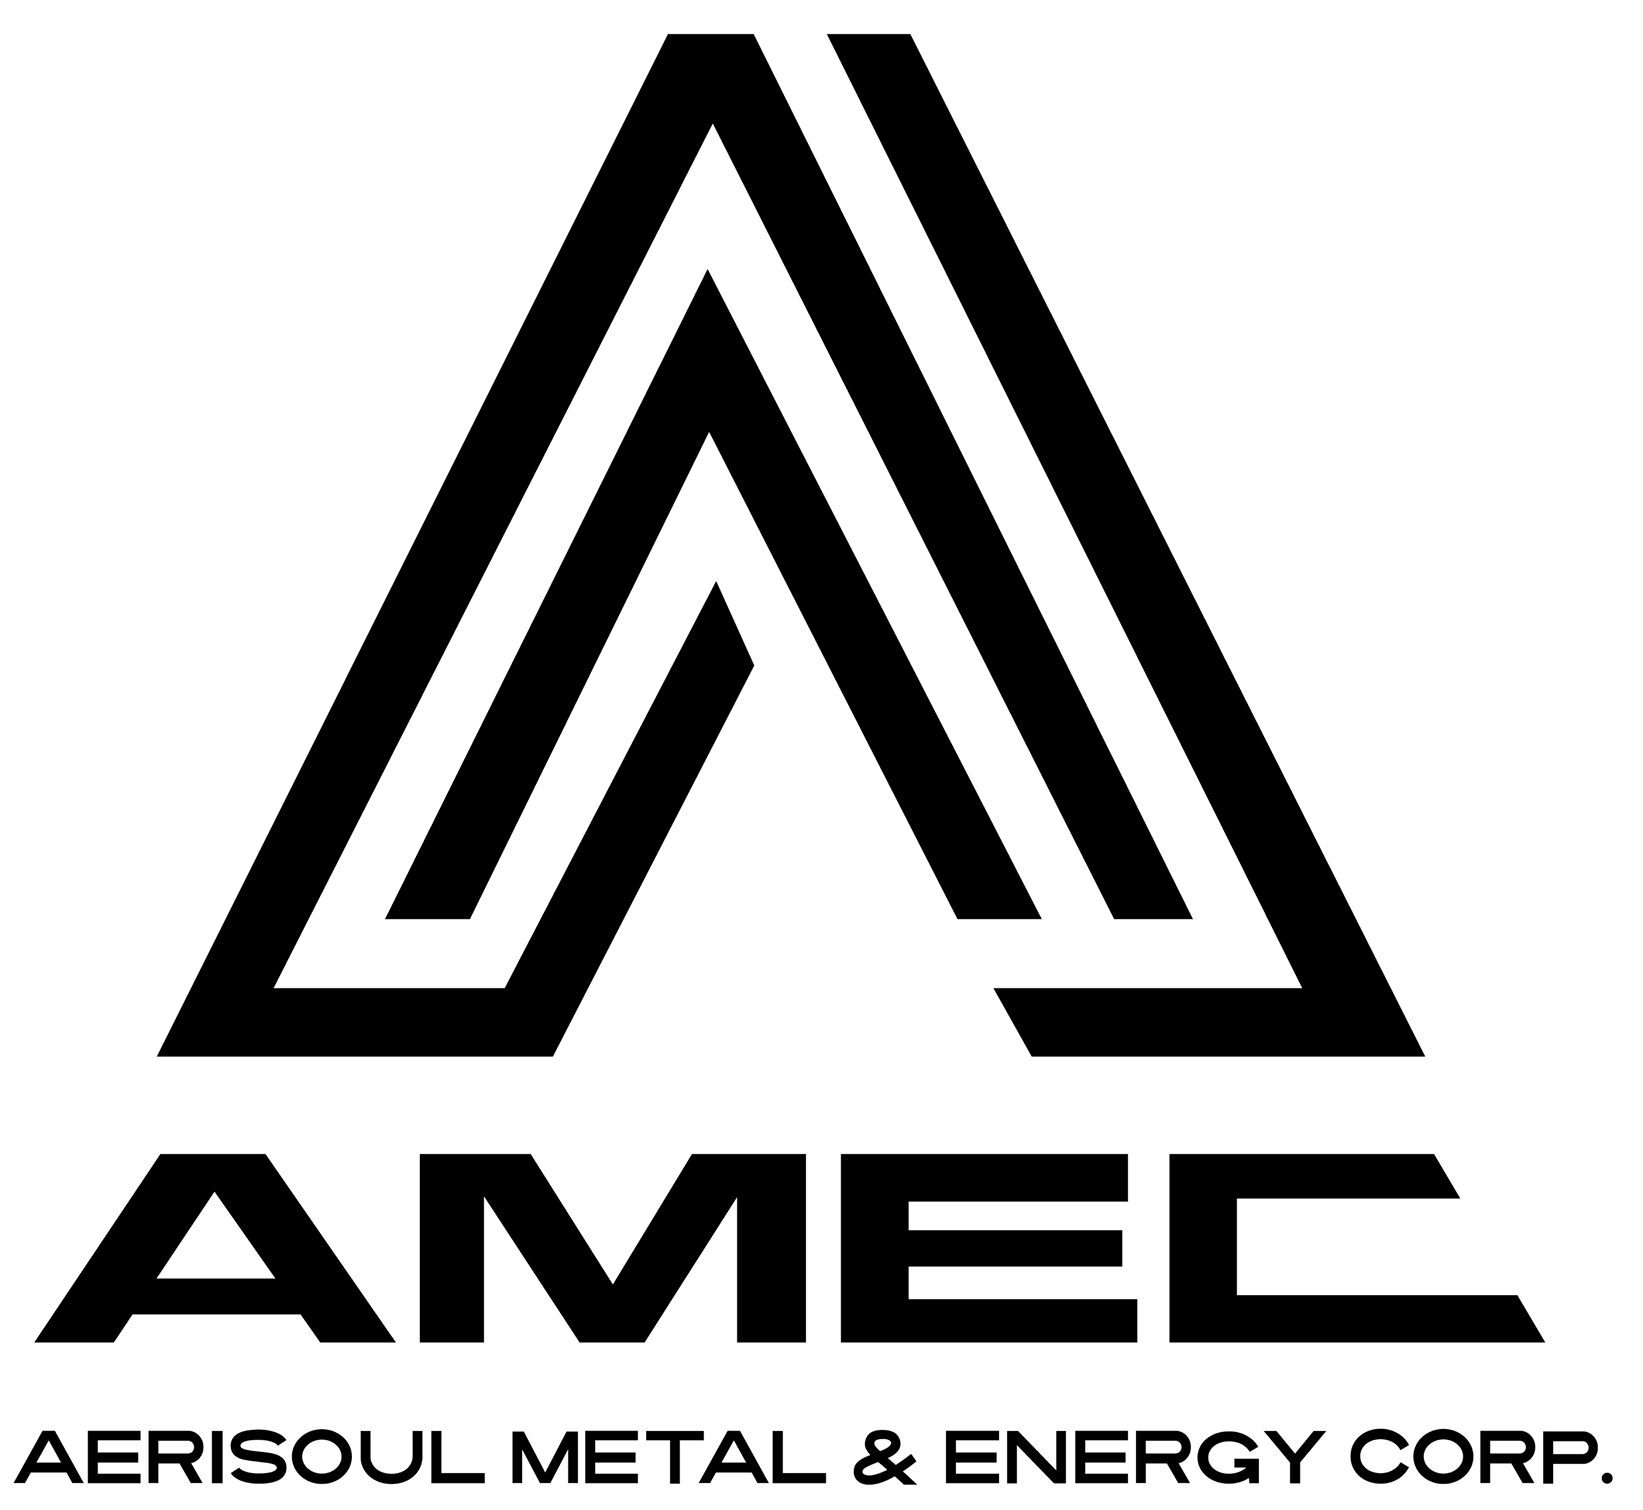 Aerisoul Metal & Energy Corporation